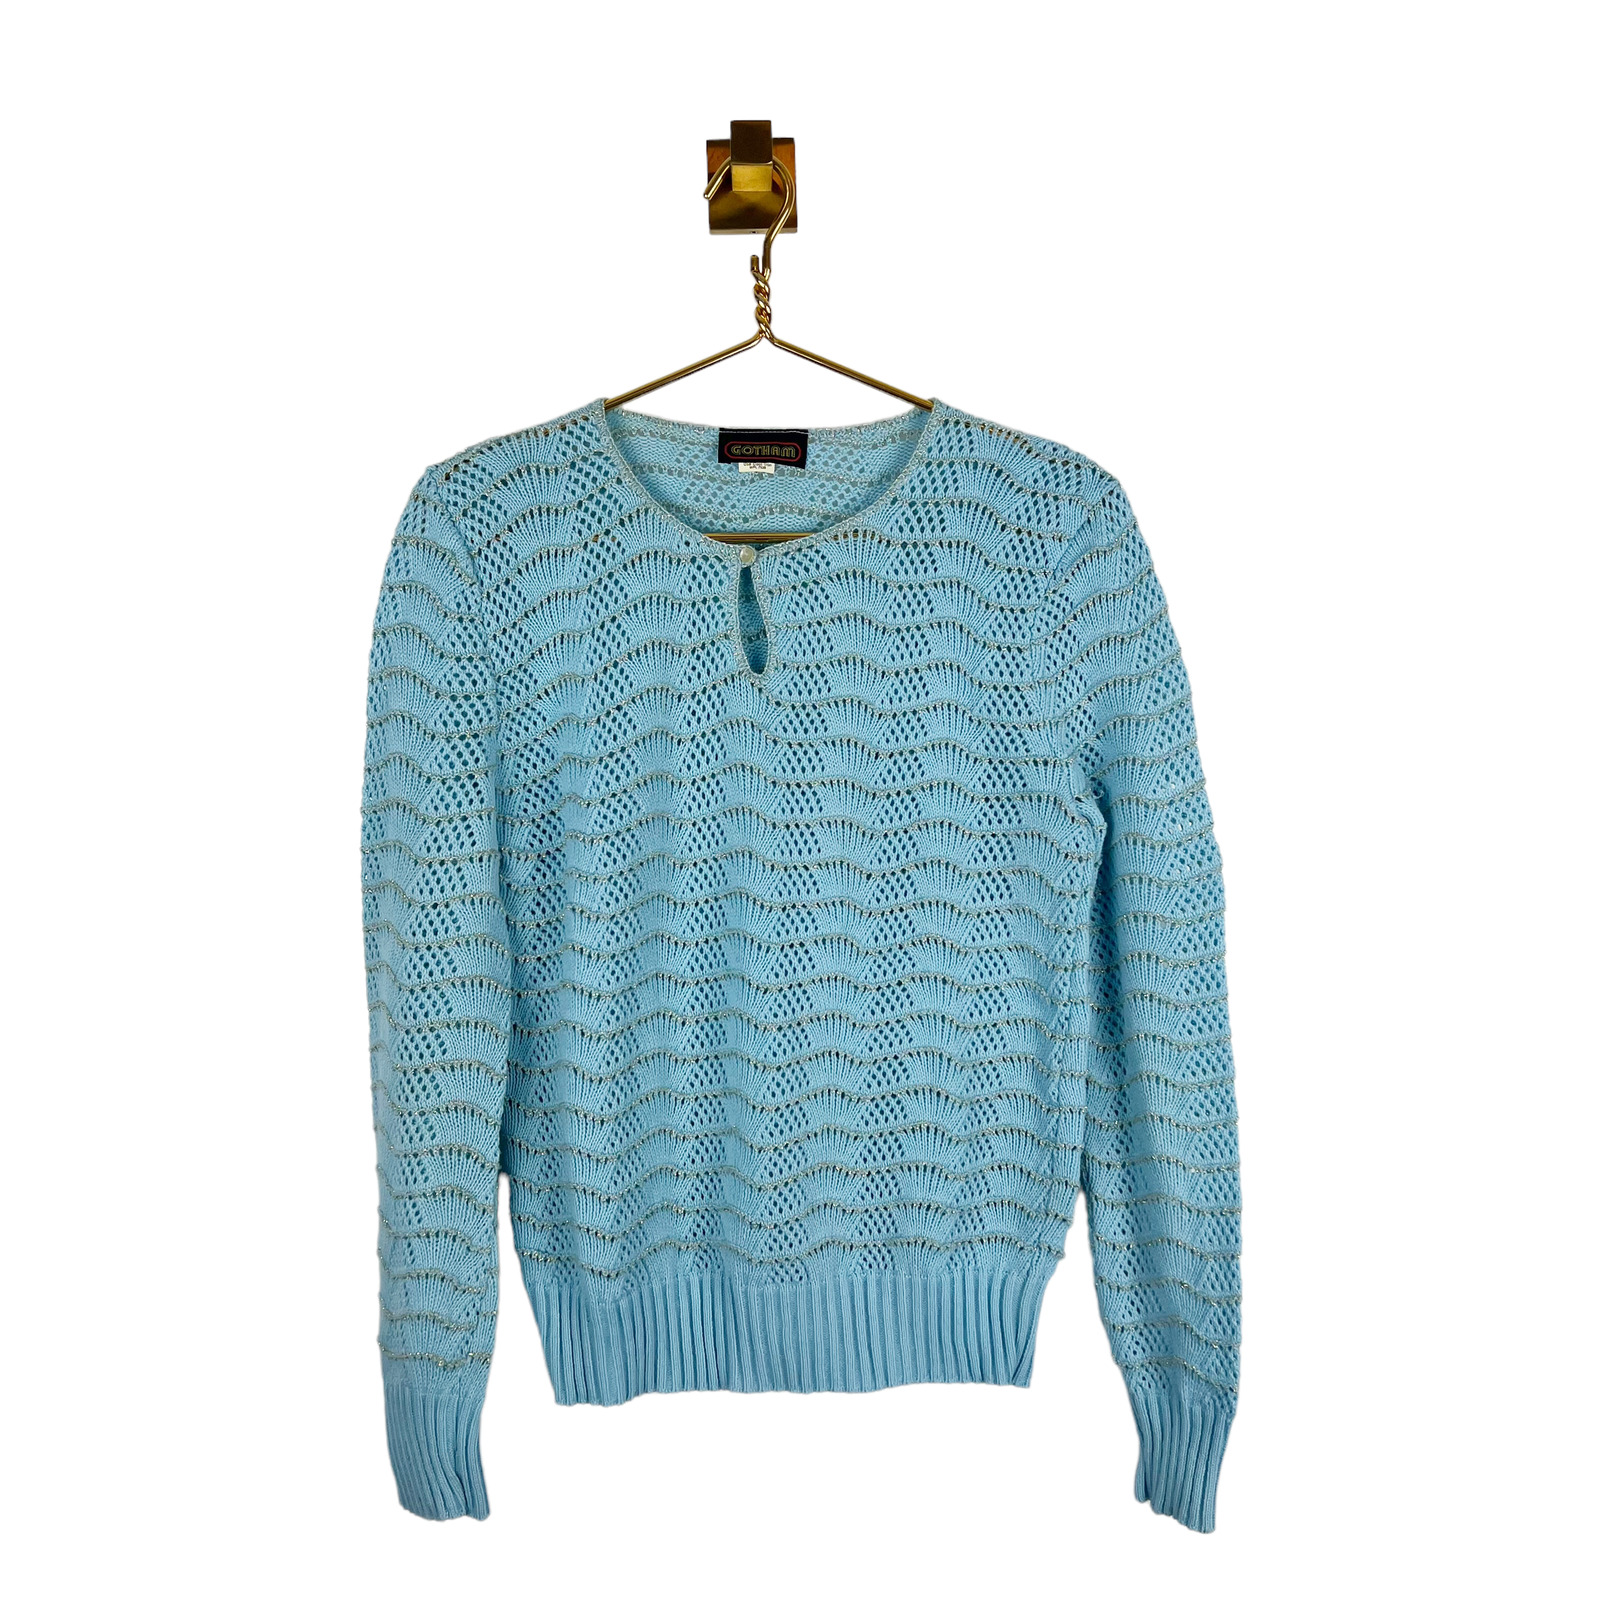 Vintage 80s Light Blue Crocheted Knit Sweater Gol… - image 1